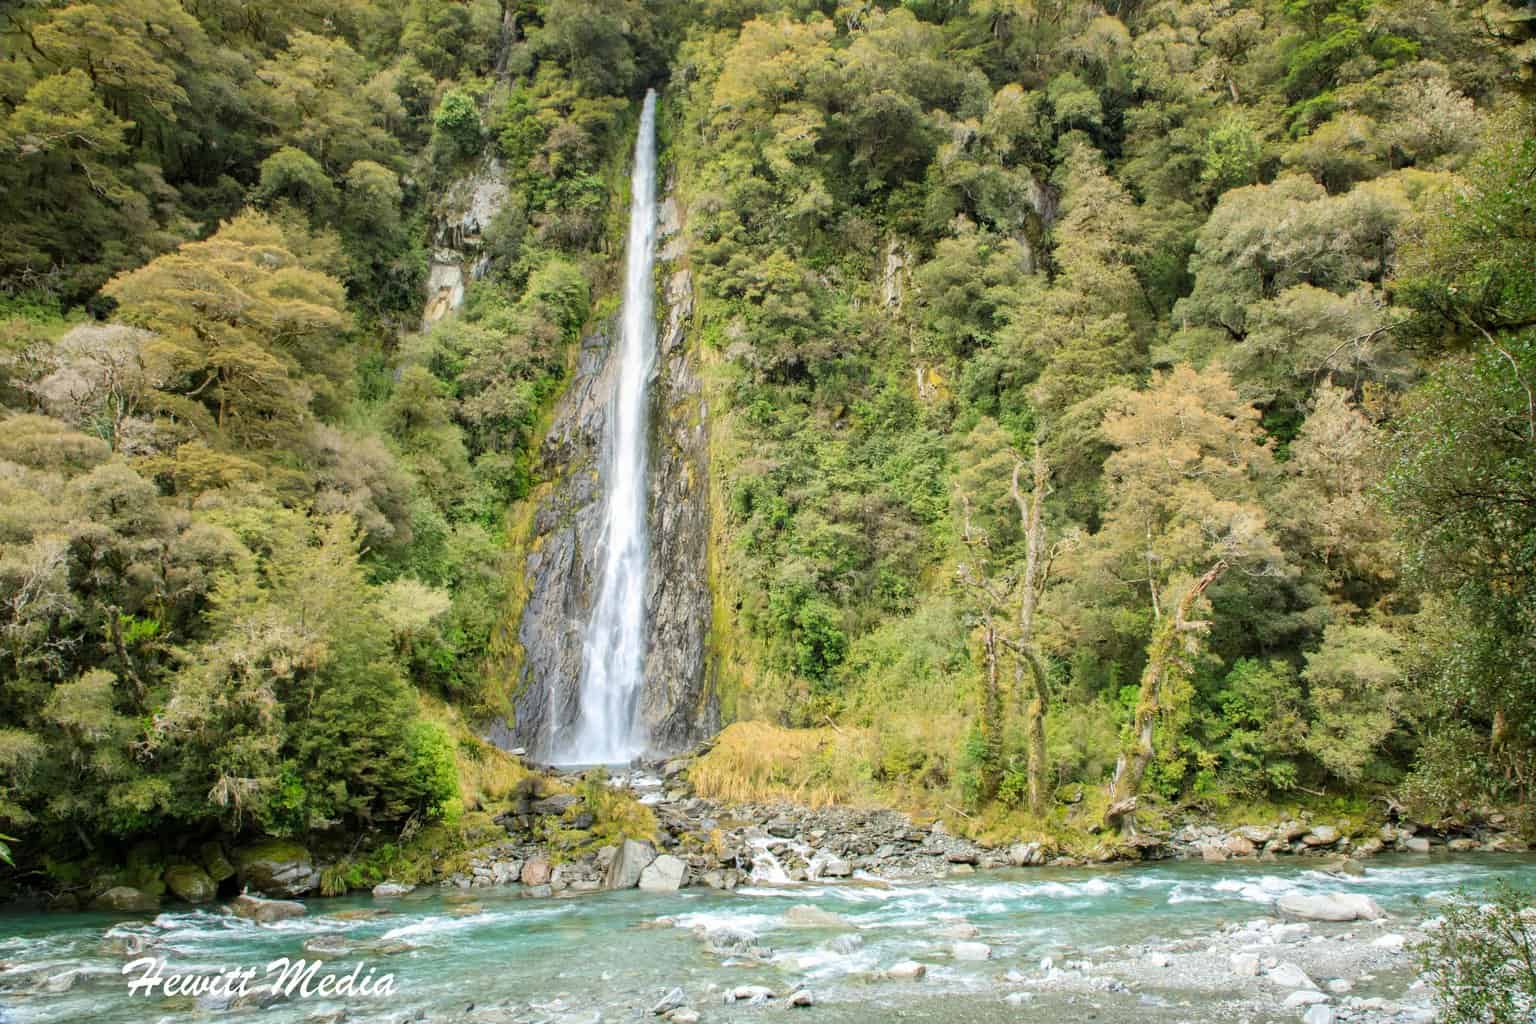 Wanaka New Zealand Guide - Mount Aspiring National Park